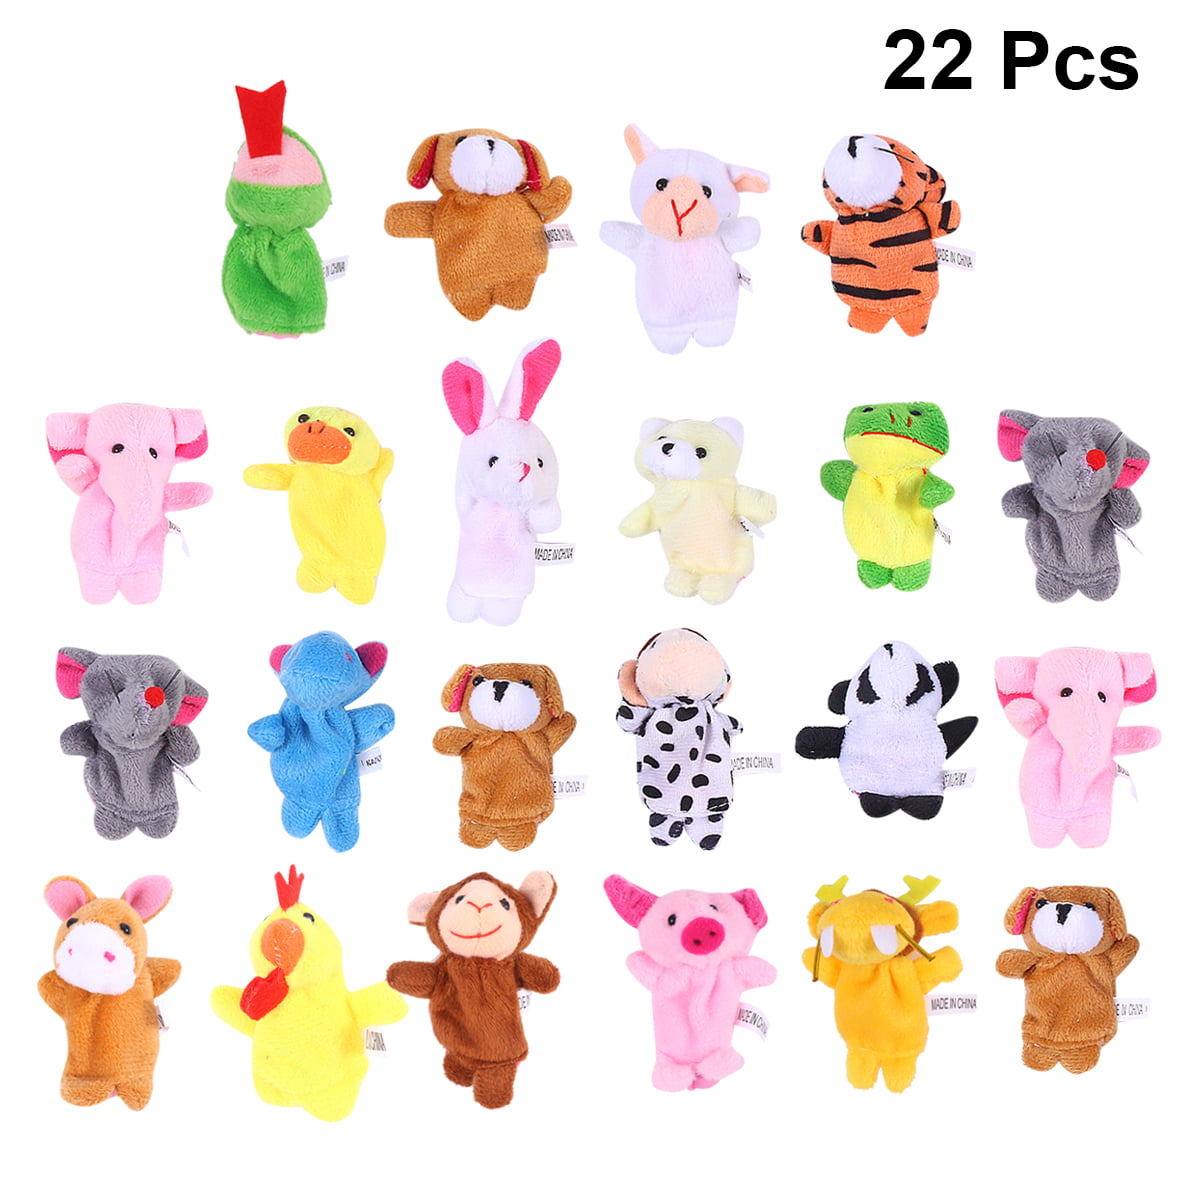 Plush Hand Puppet Farm Animal Children Baby Soft Glove Play Toy with Sound 10" 